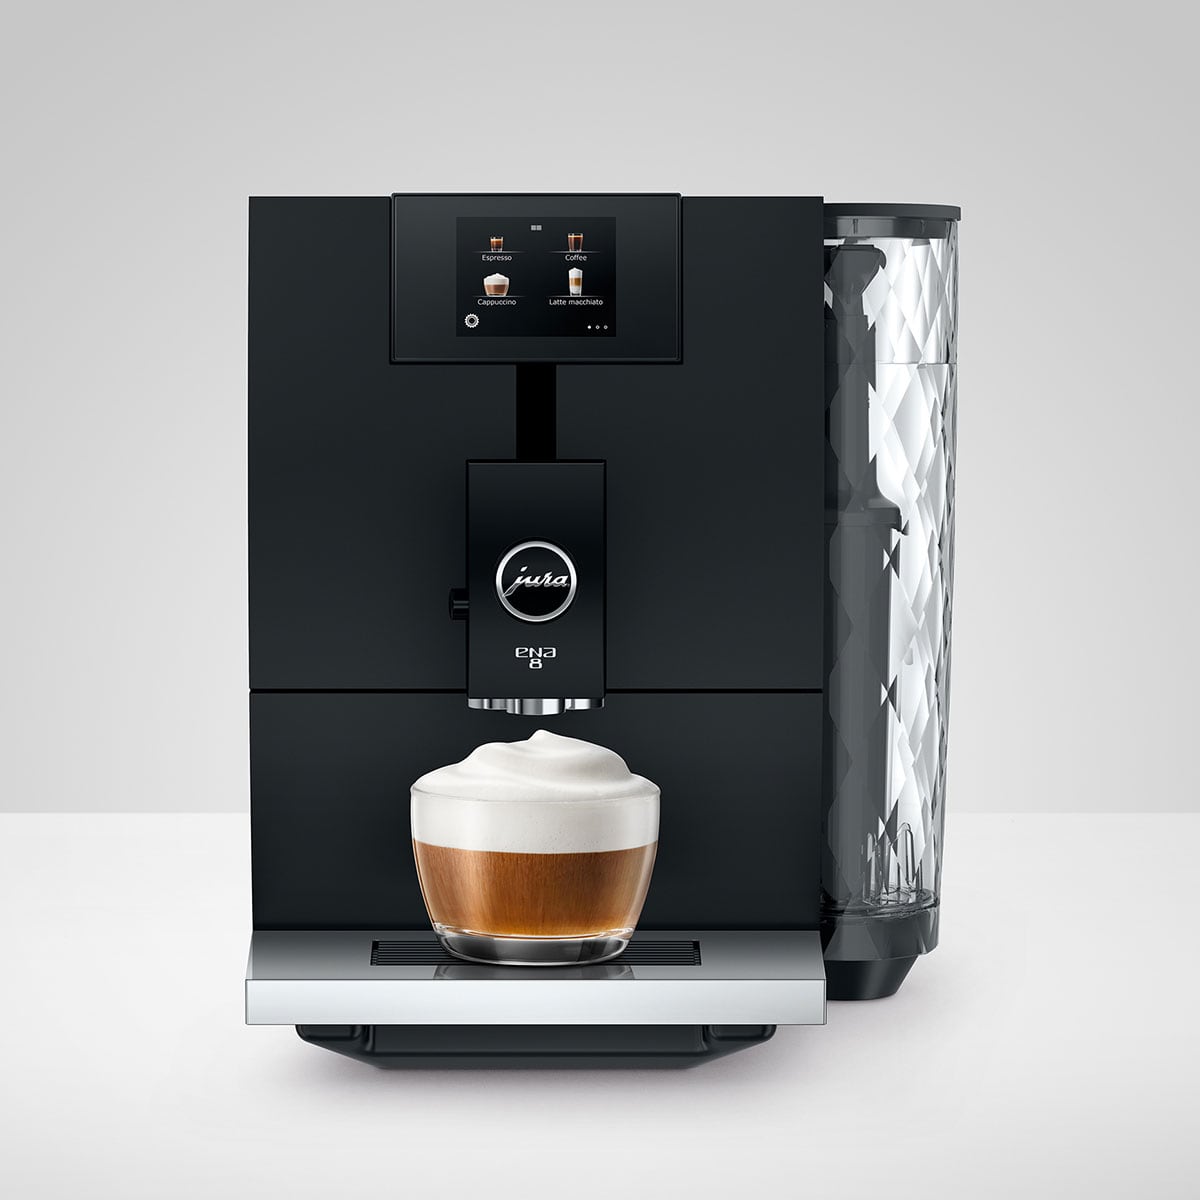 JURA ENA 8 Fully Automatic Espresso Machine, Metropolitan Black